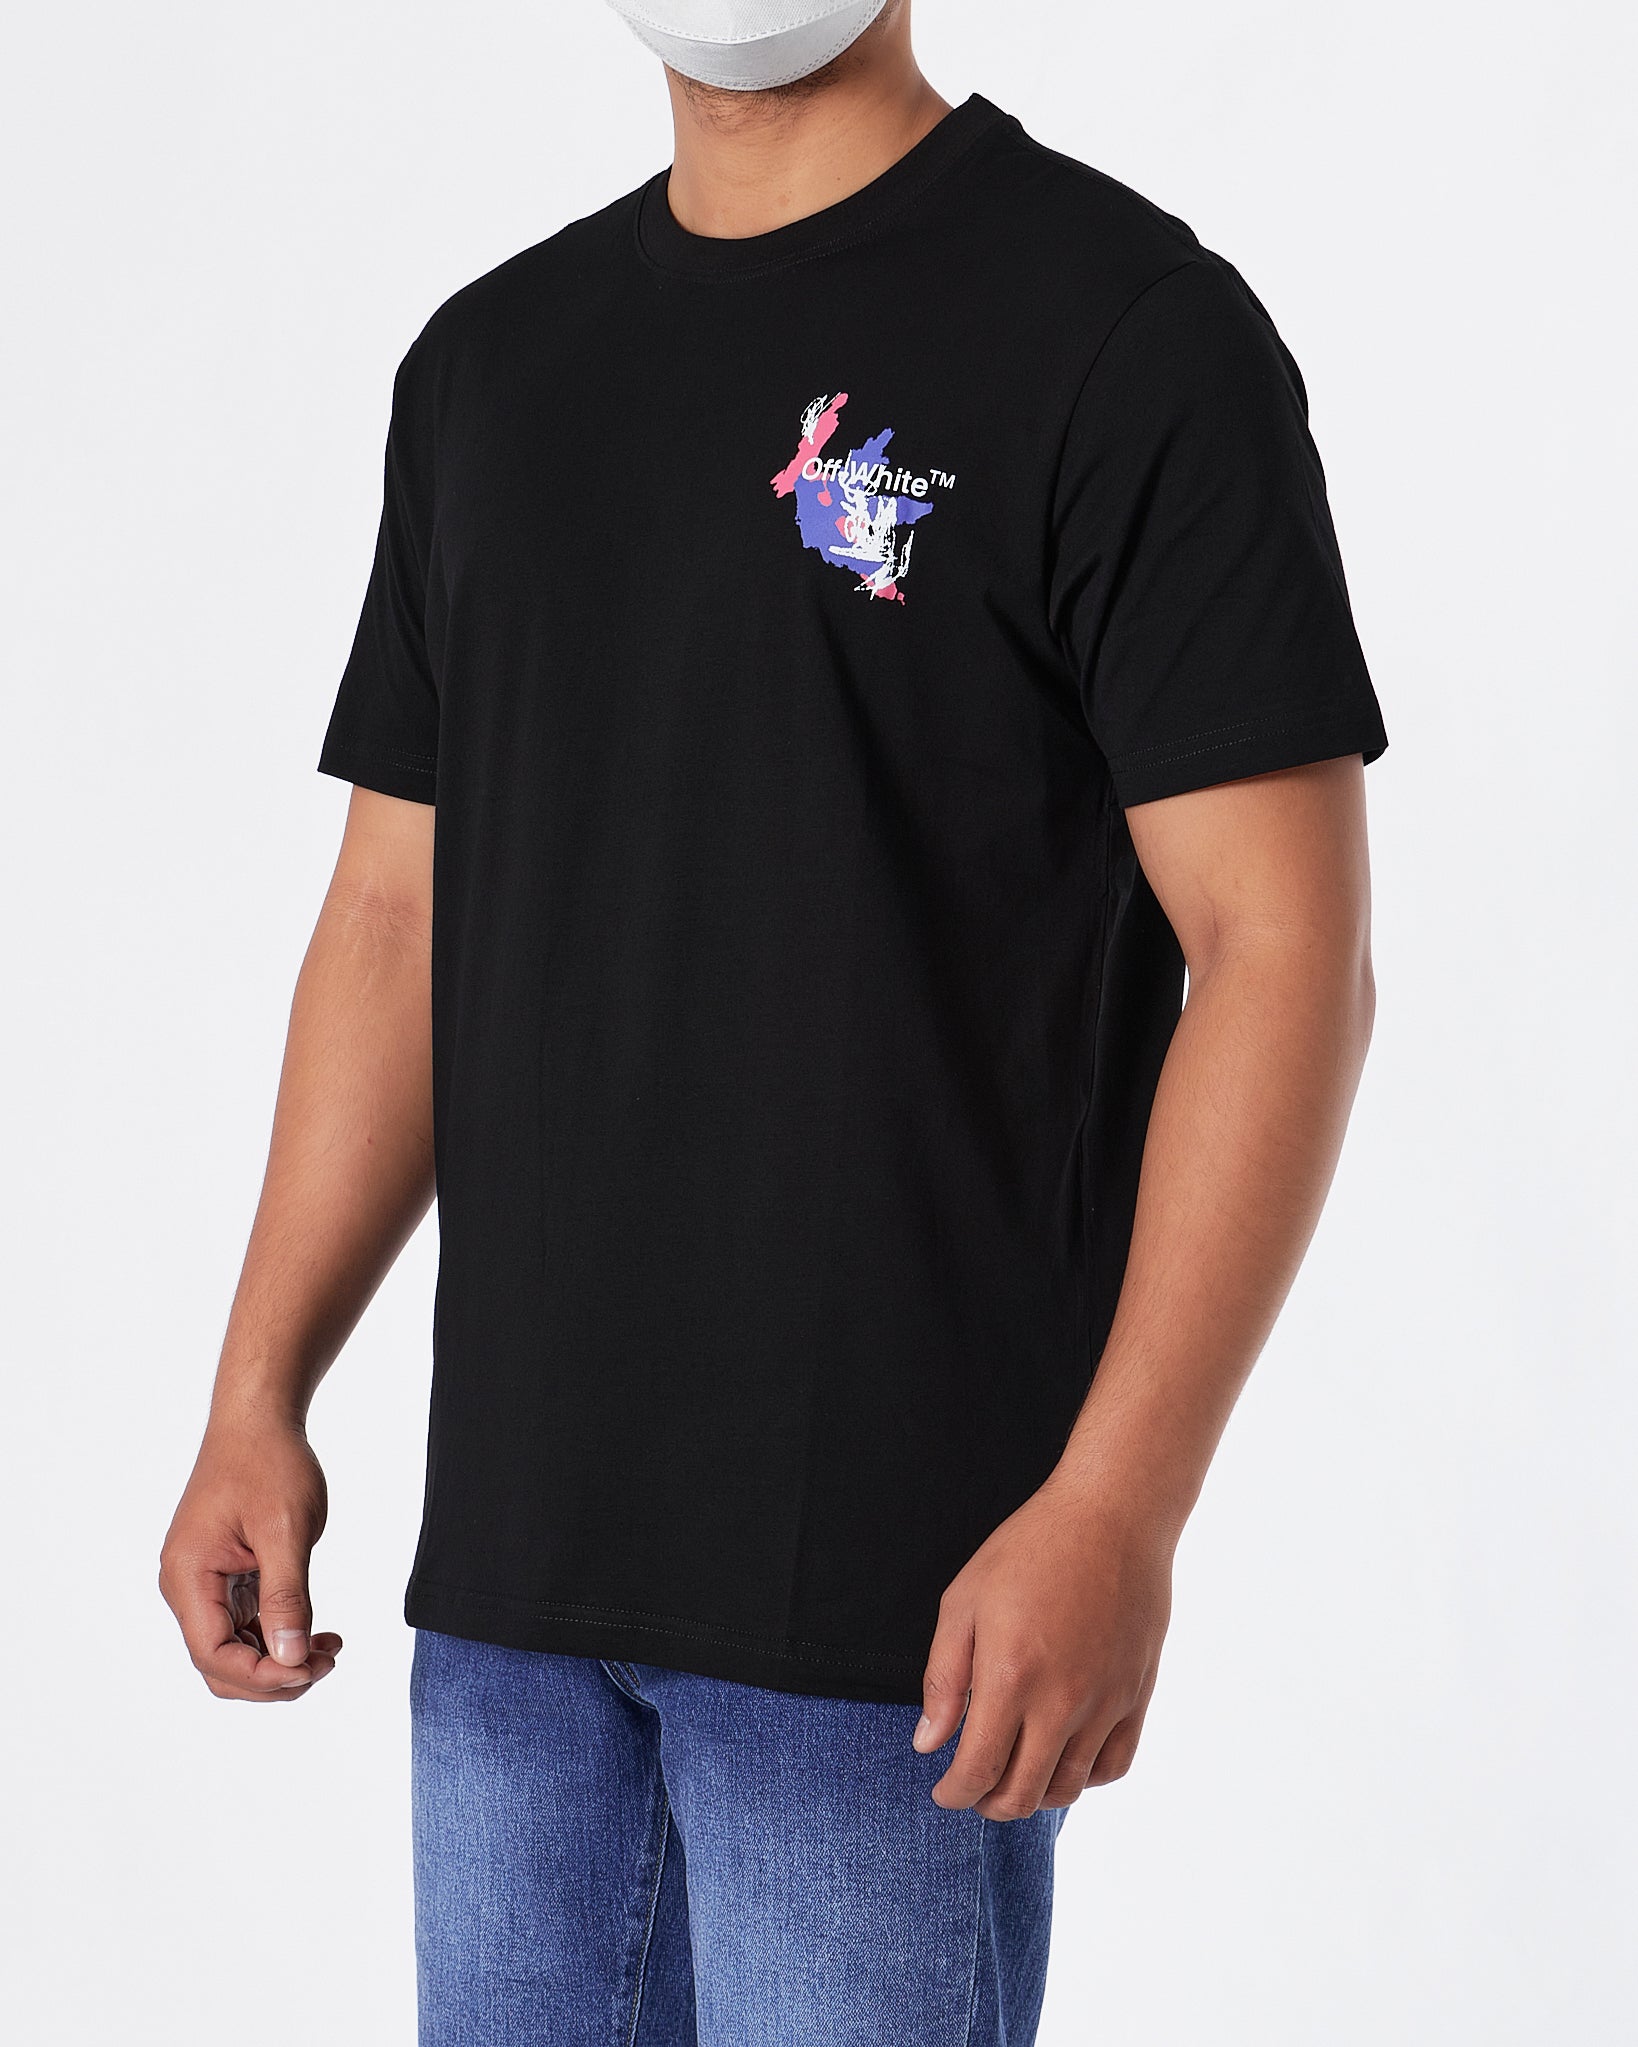 OW Cross Arrow Graffiti Back Printed Men Black T-Shirt 20.90